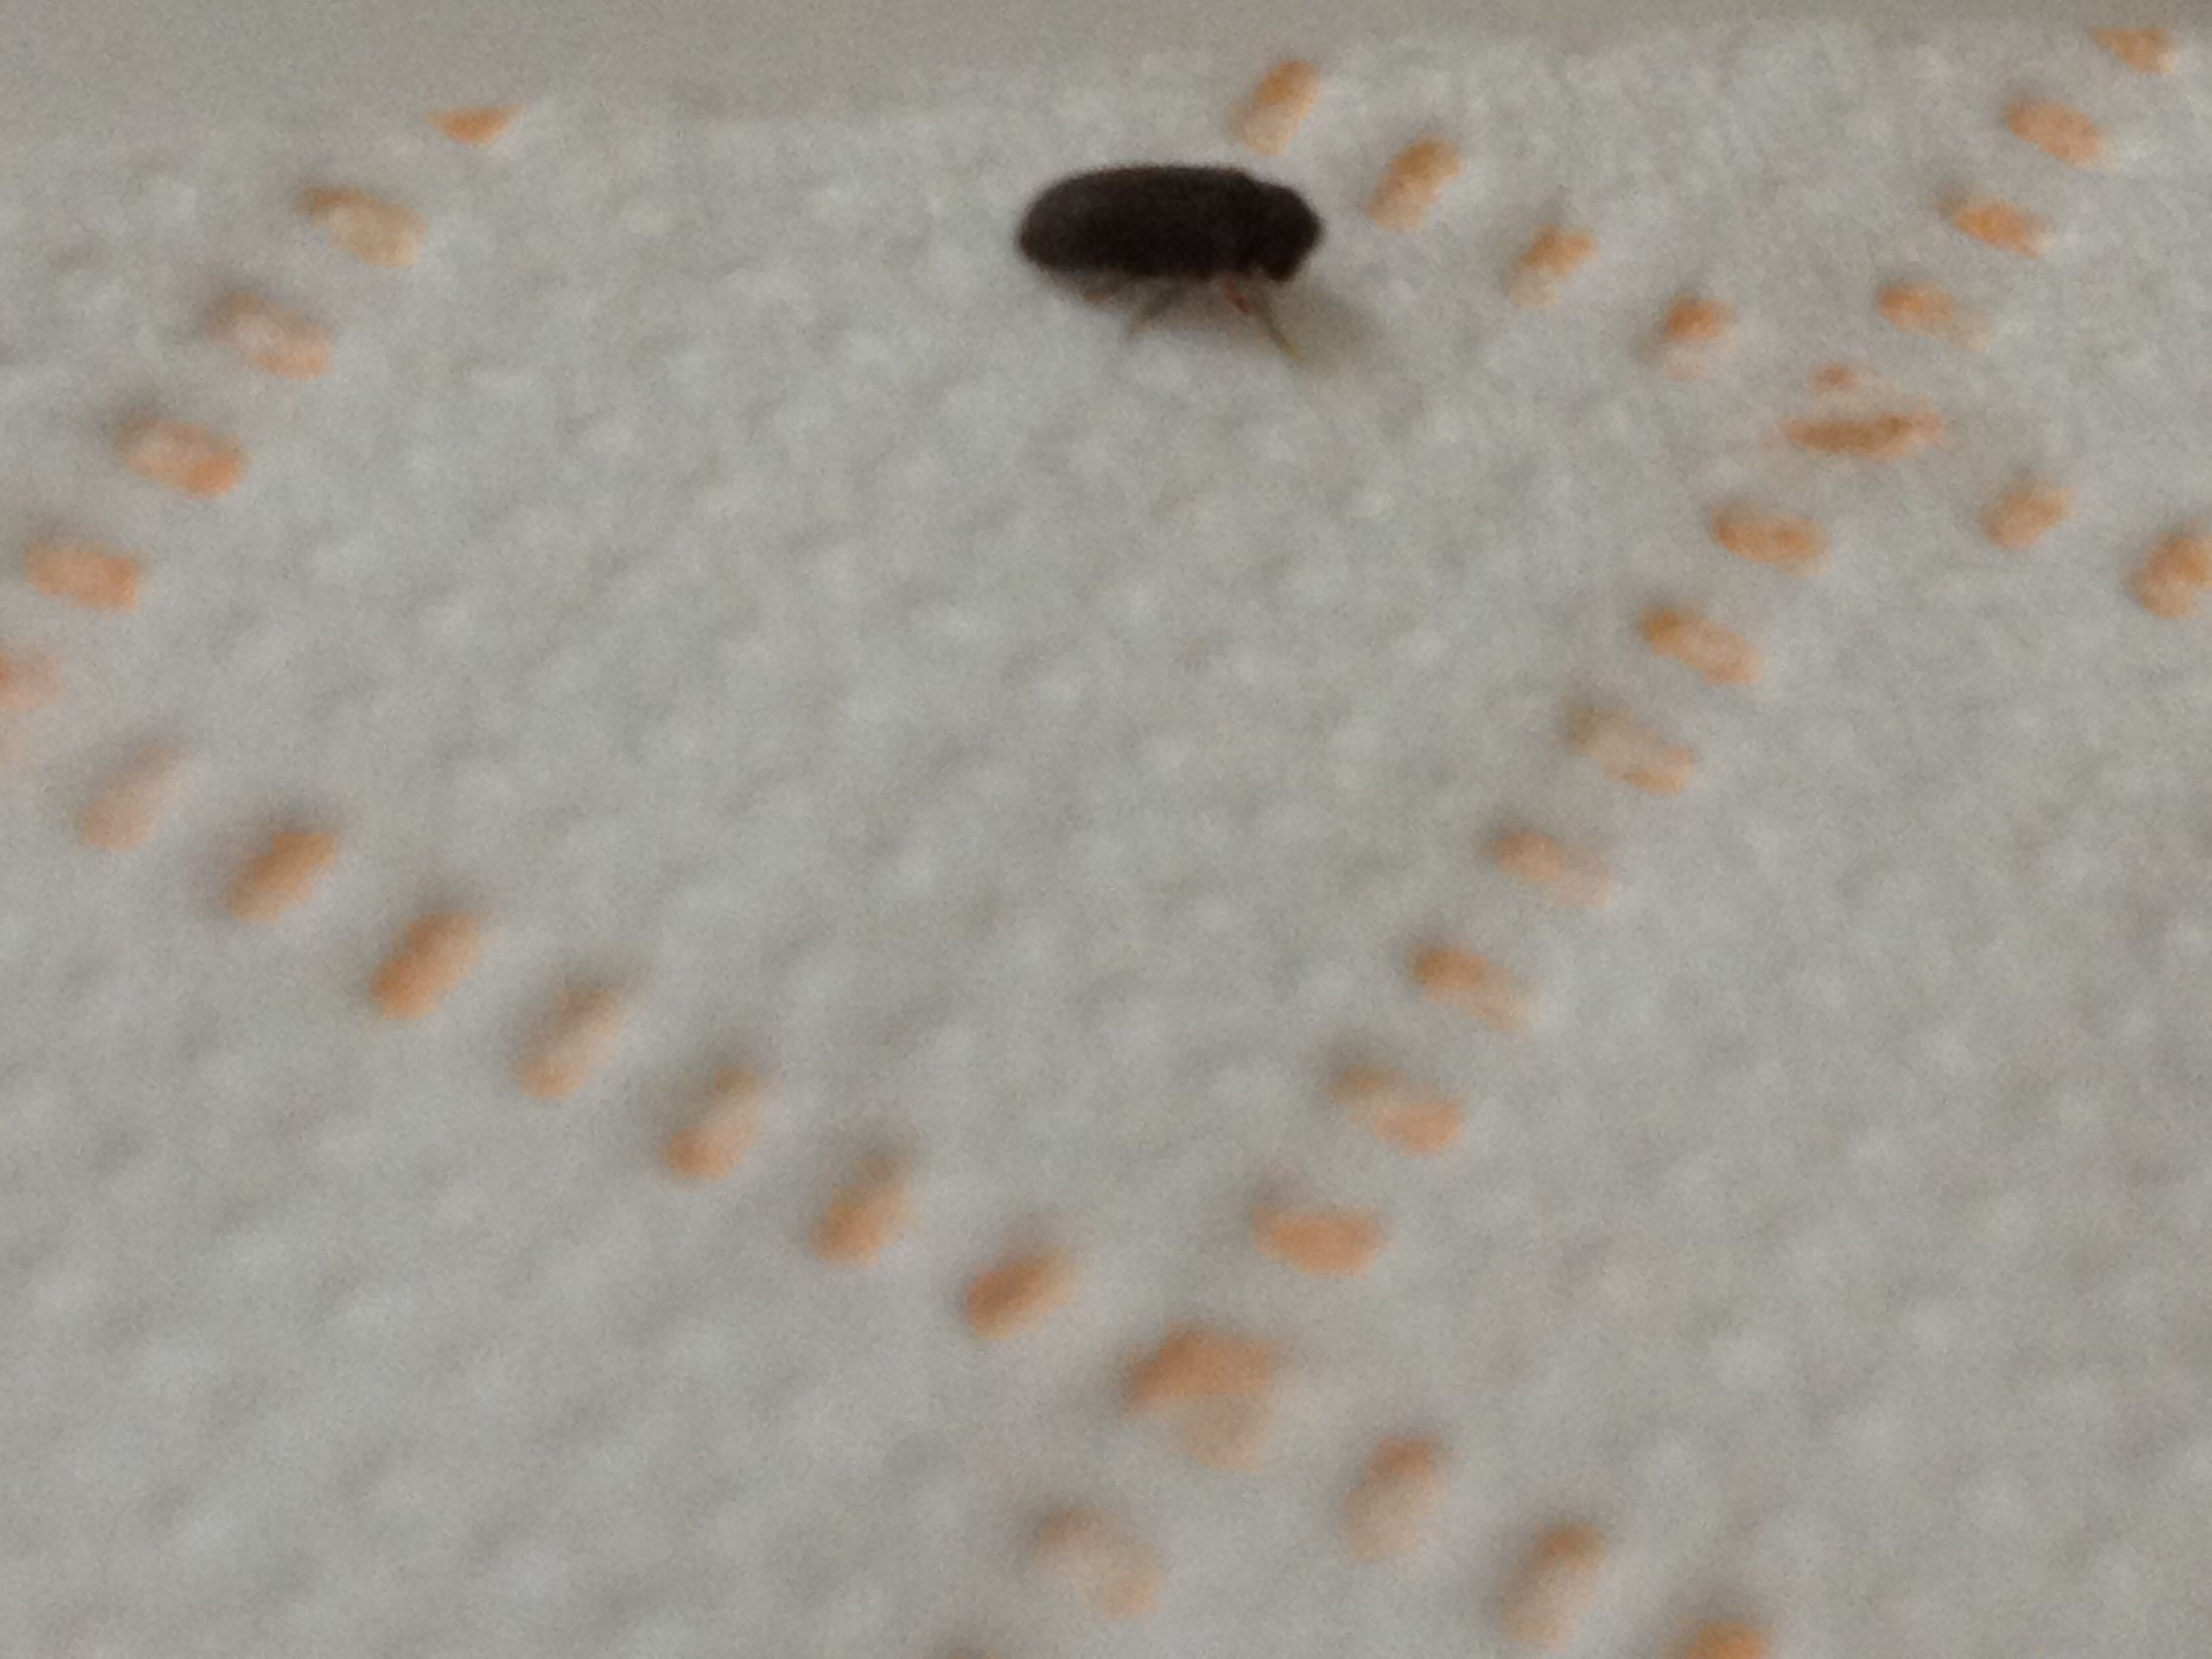 Small Black Flies In Bathroom
 NaturePlus Please help me identify tiny black bugs found